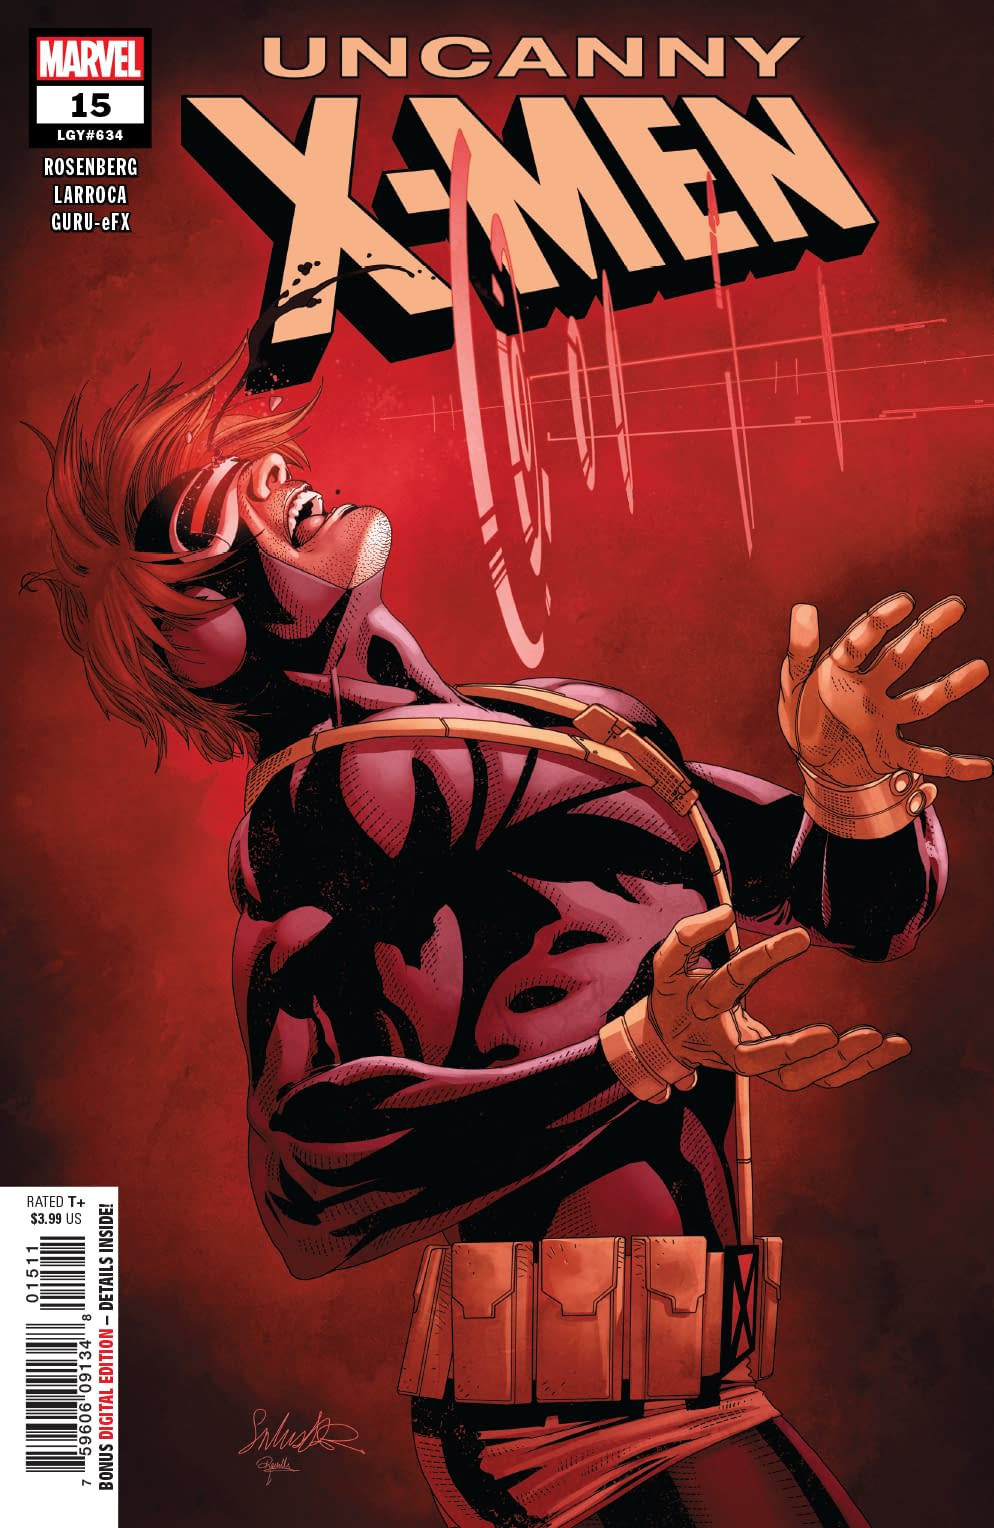 The Audacity of Captain America in Next Week's Uncanny X-Men #15